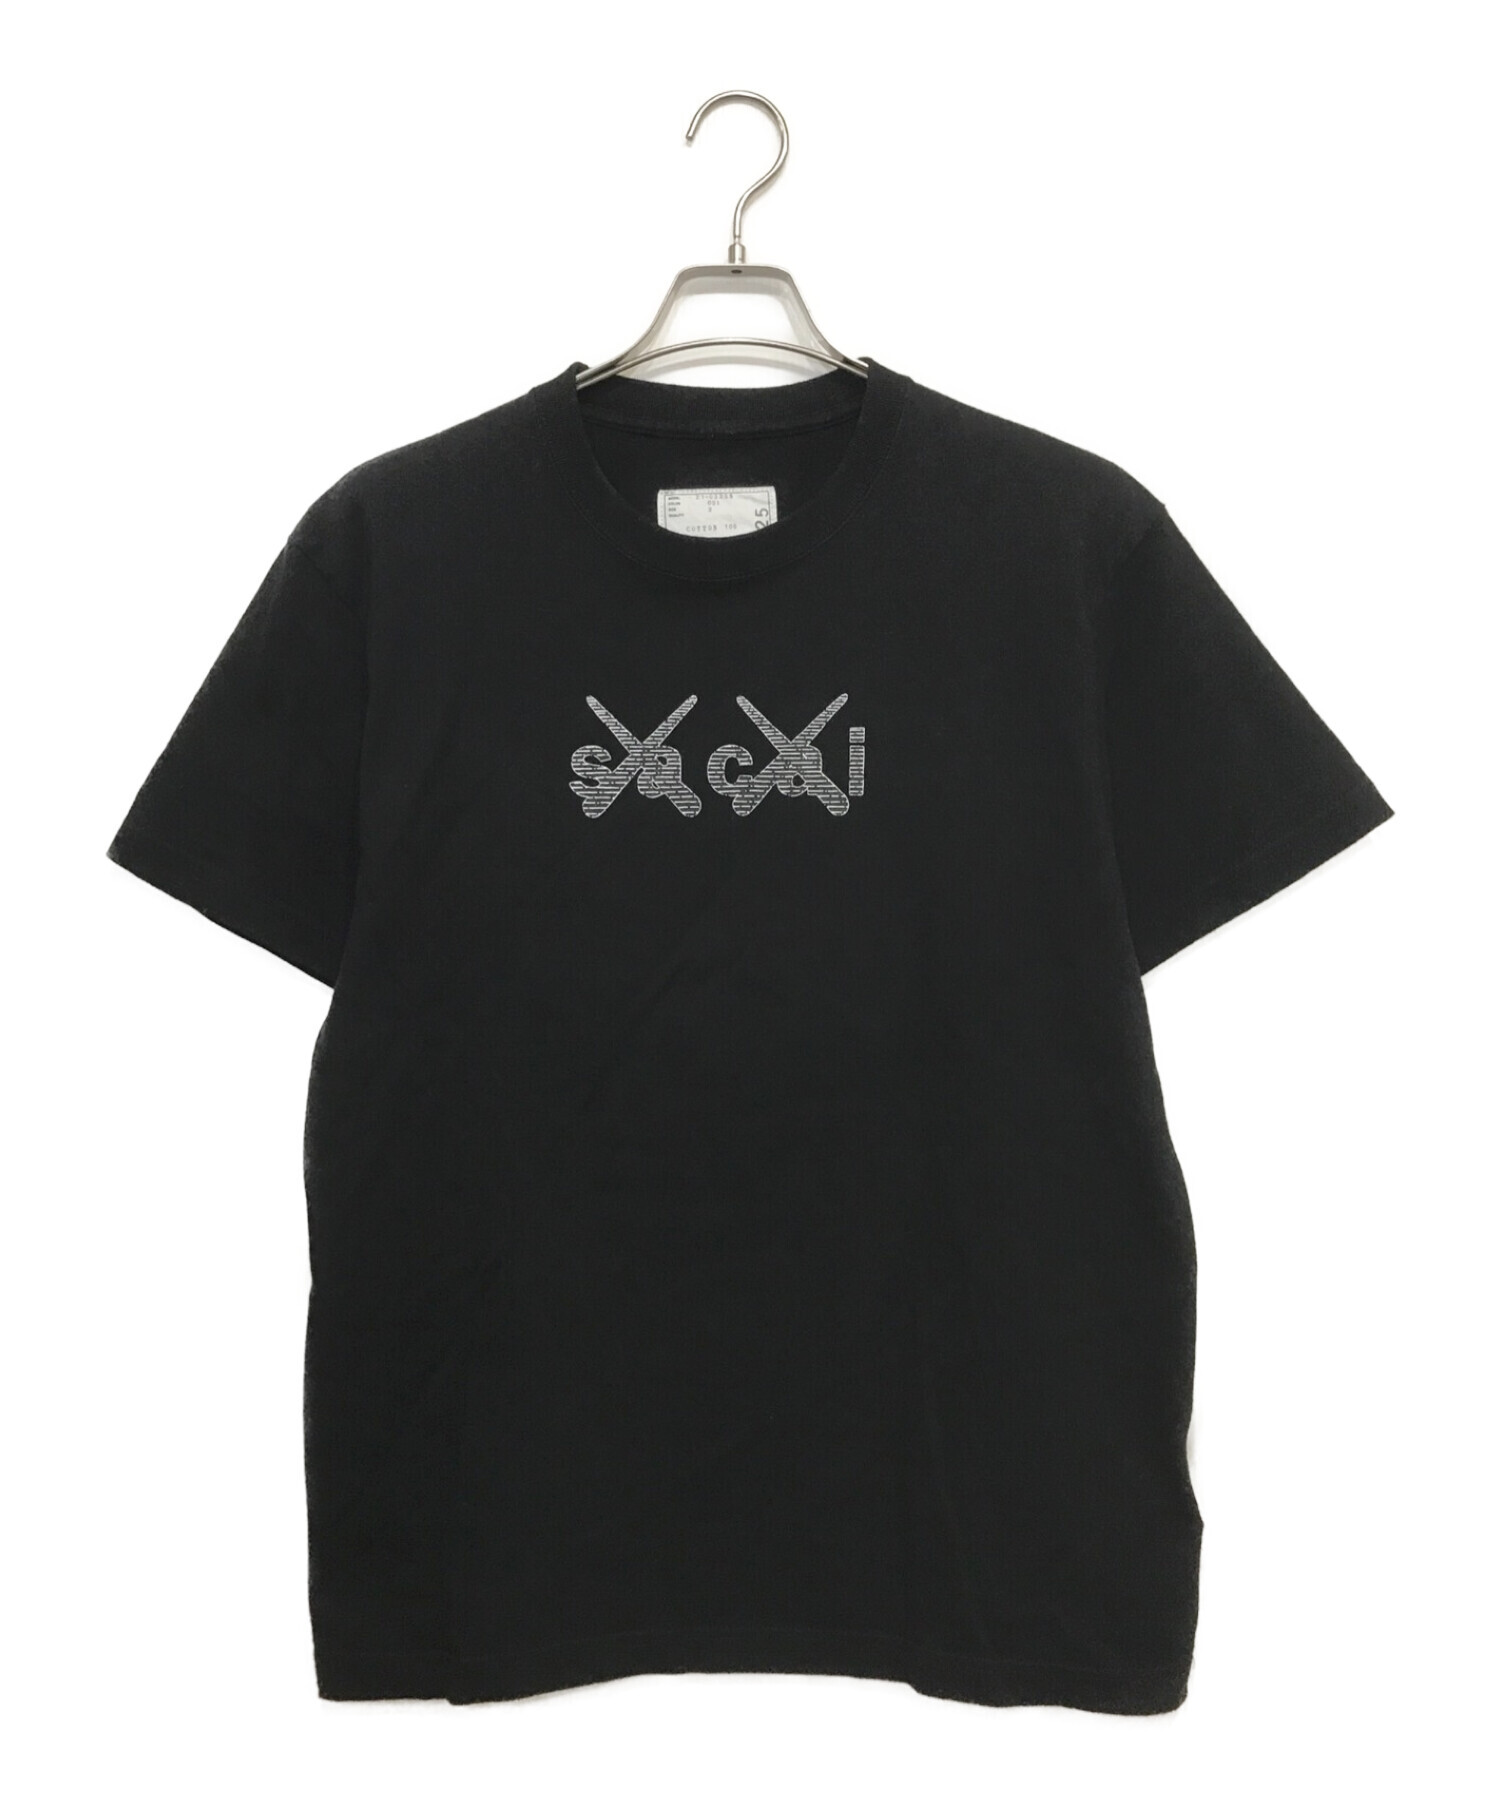 sacai x KAWS (サカイ×カウズ) プリントTシャツ / Print T-SHIRT TOKYO FIRST ブラック サイズ:2